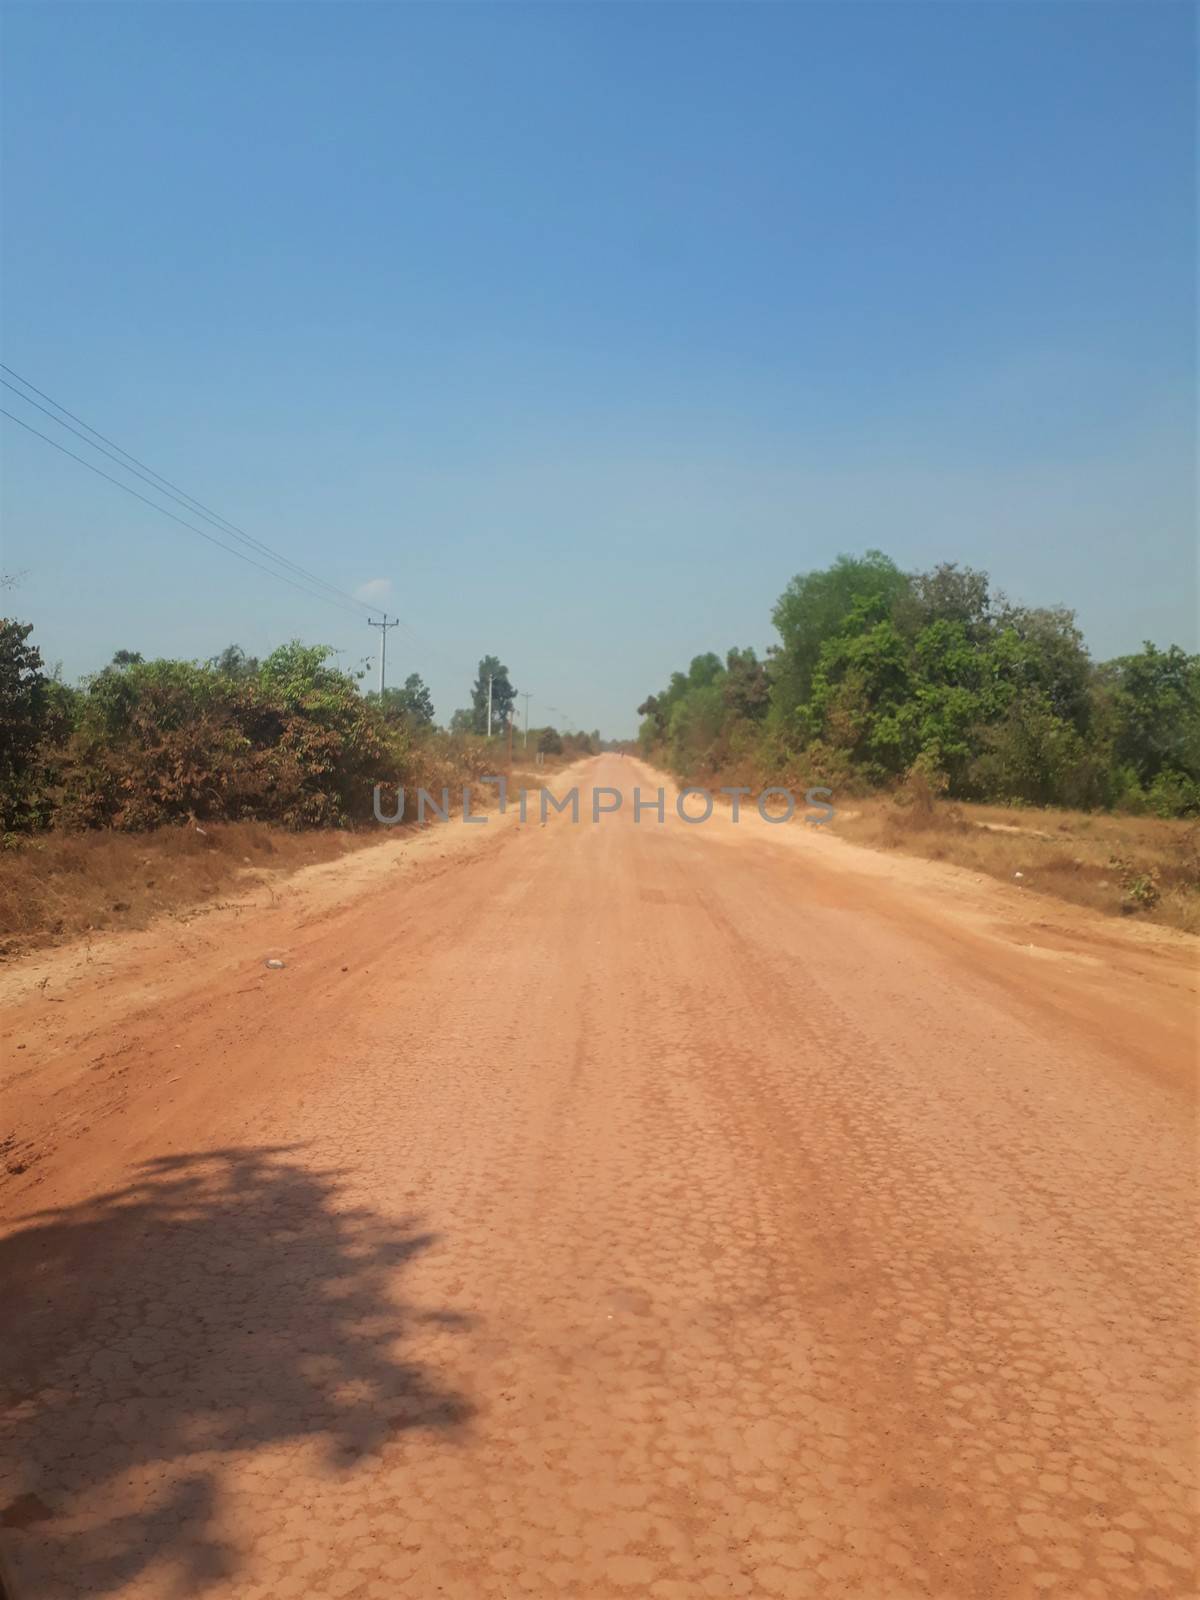 A dirt road in cambodia, asia. Red soil